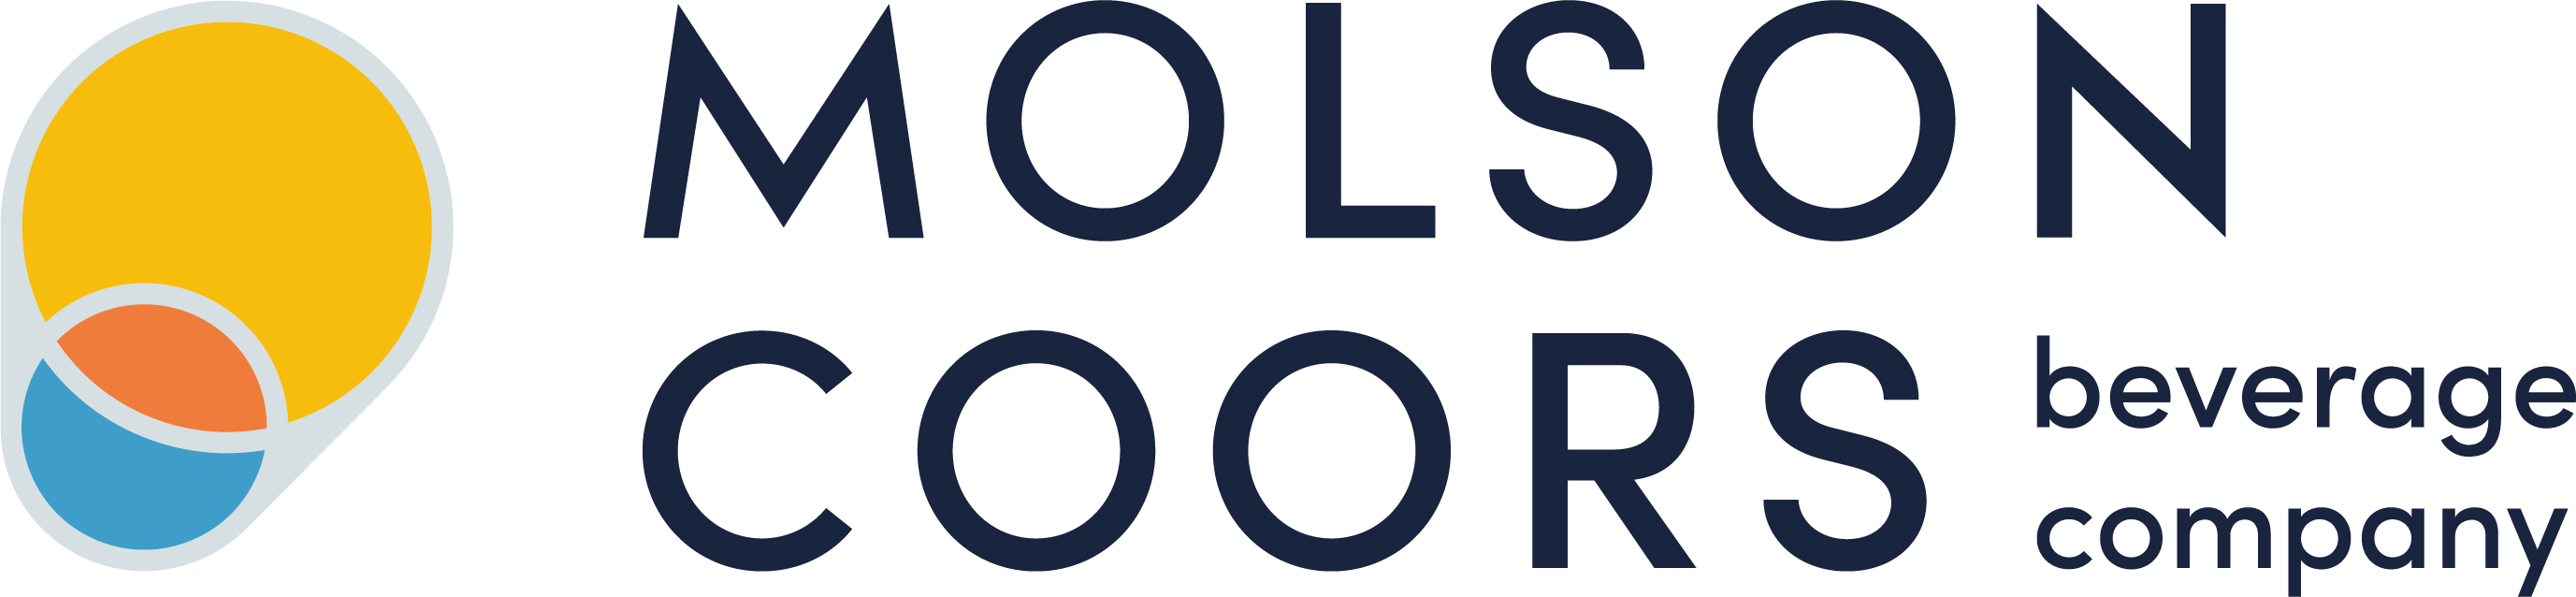 Molson Coors-Preferred Logo ON WHITE